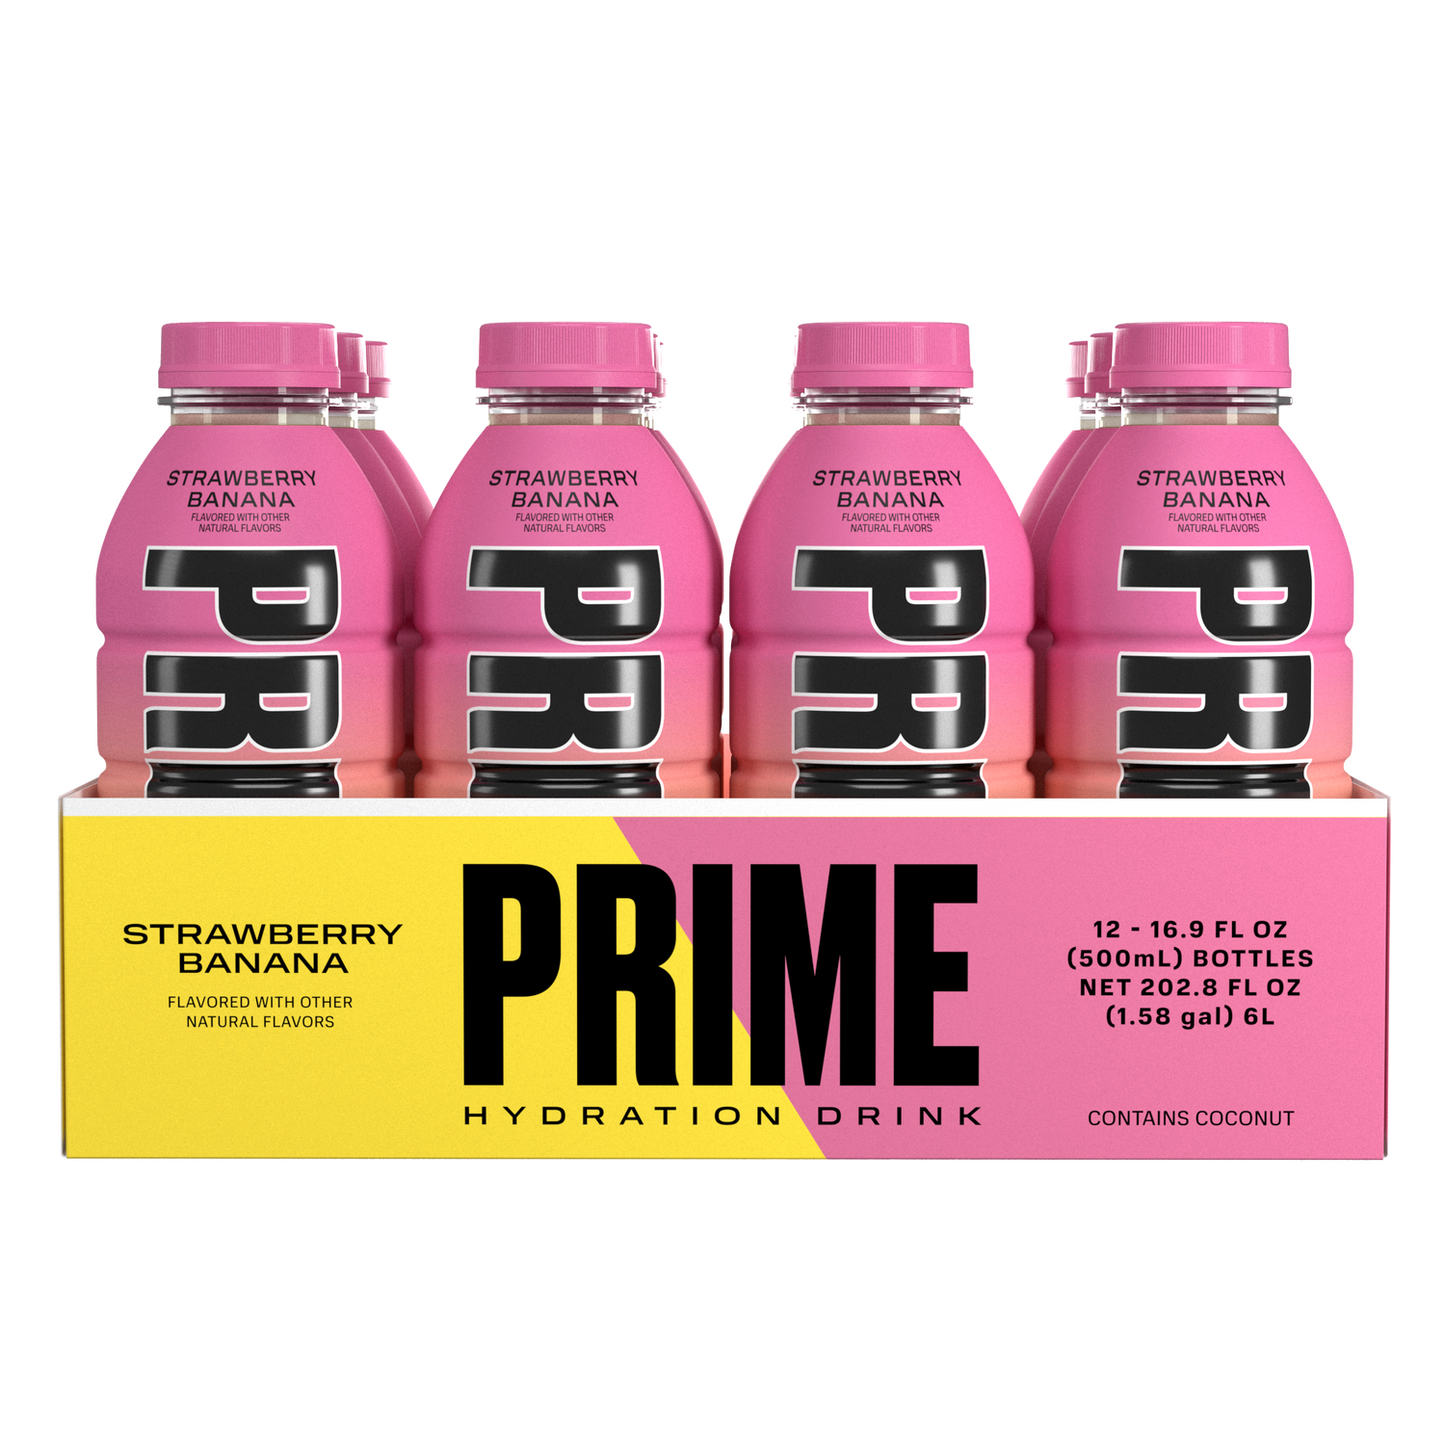 NEW! Prime Sports Drink Strawberry Banana - 16.9Fl oz Hydration Beverage Logan Paul and KSI